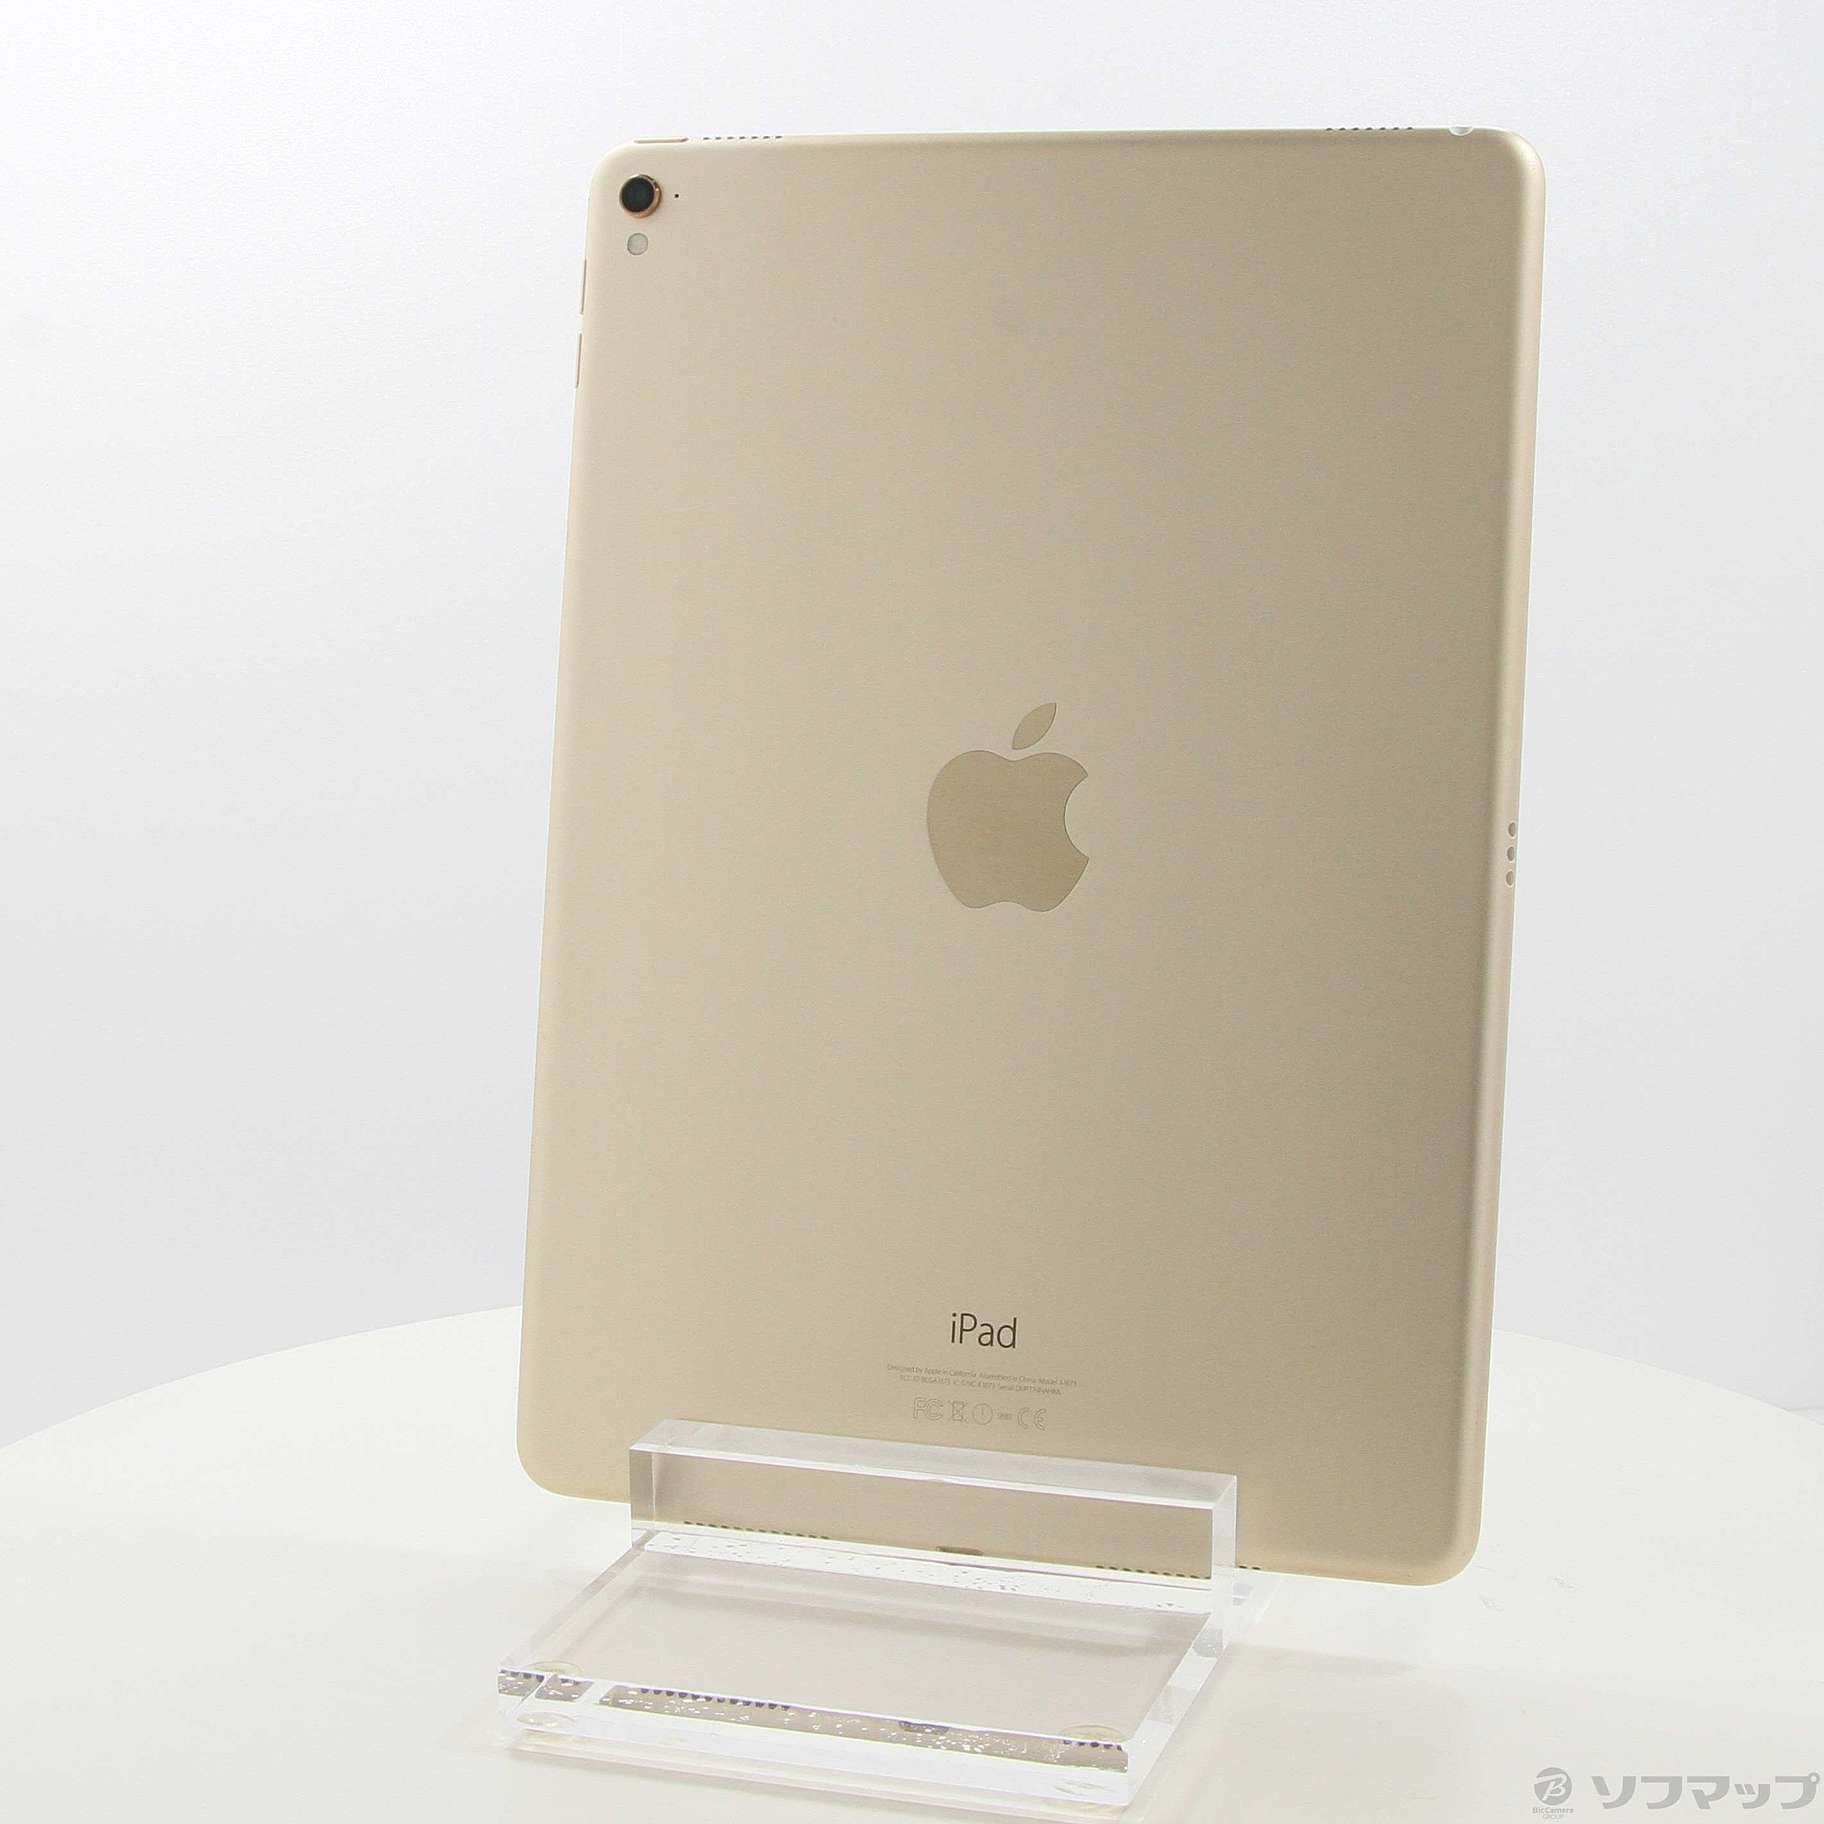 限定品質保証状態良 Apple iPad Pro 9.7インチ Wi-Fi 128GB MLMX2J/A ゴールド 本体 動作確認済 EC22-911jy/F3 iPad本体